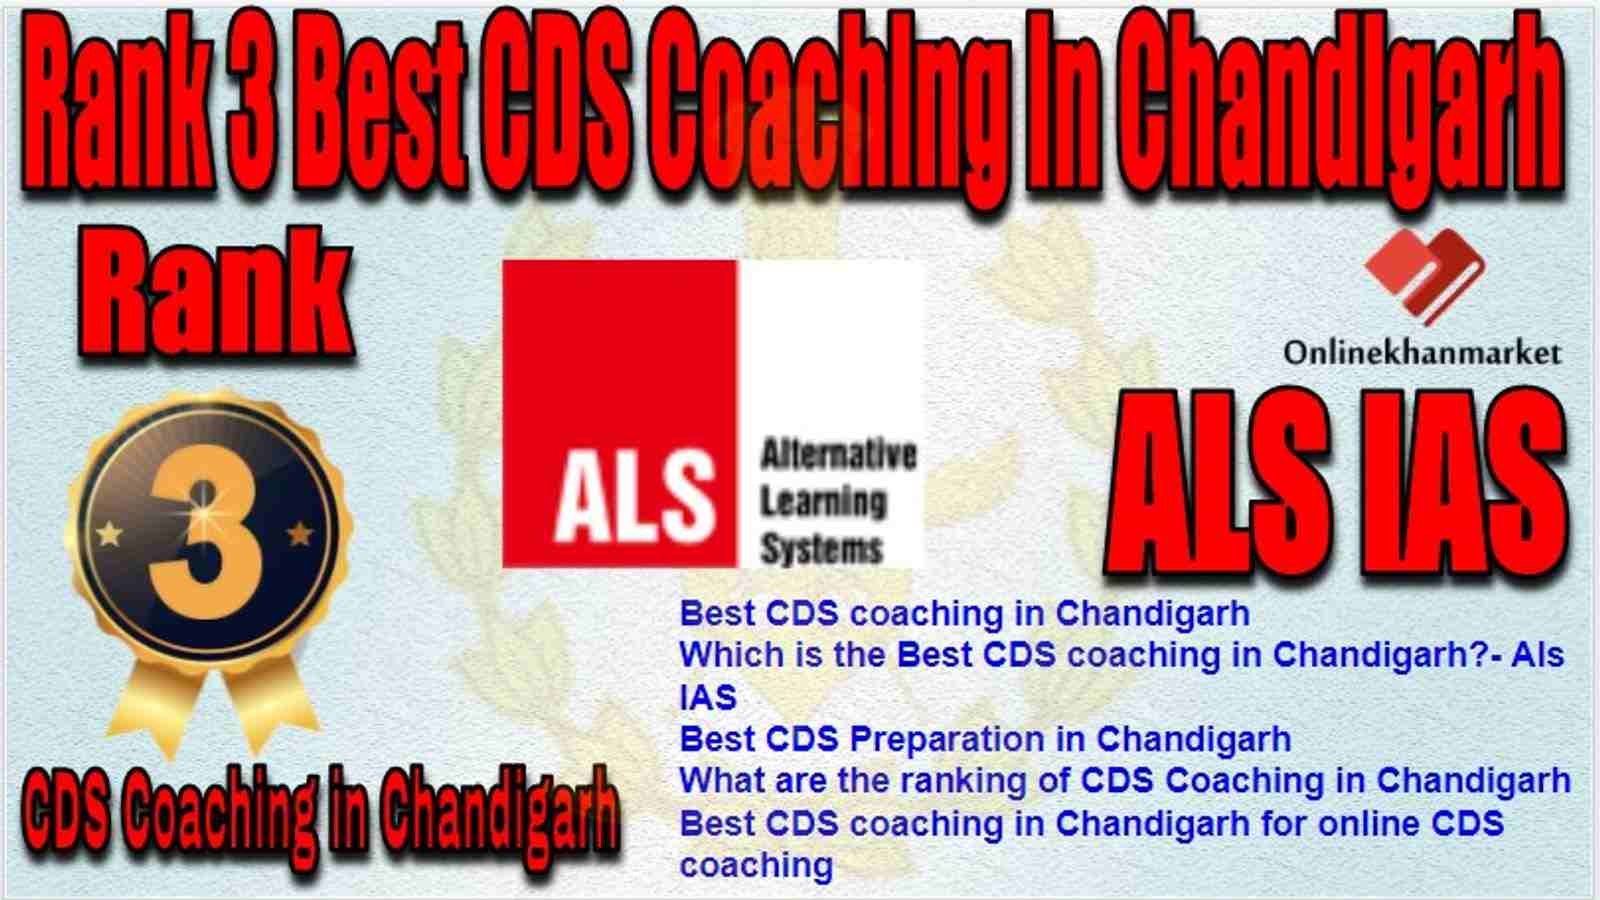 Rank 3 Best CDS Coaching in chandigarh